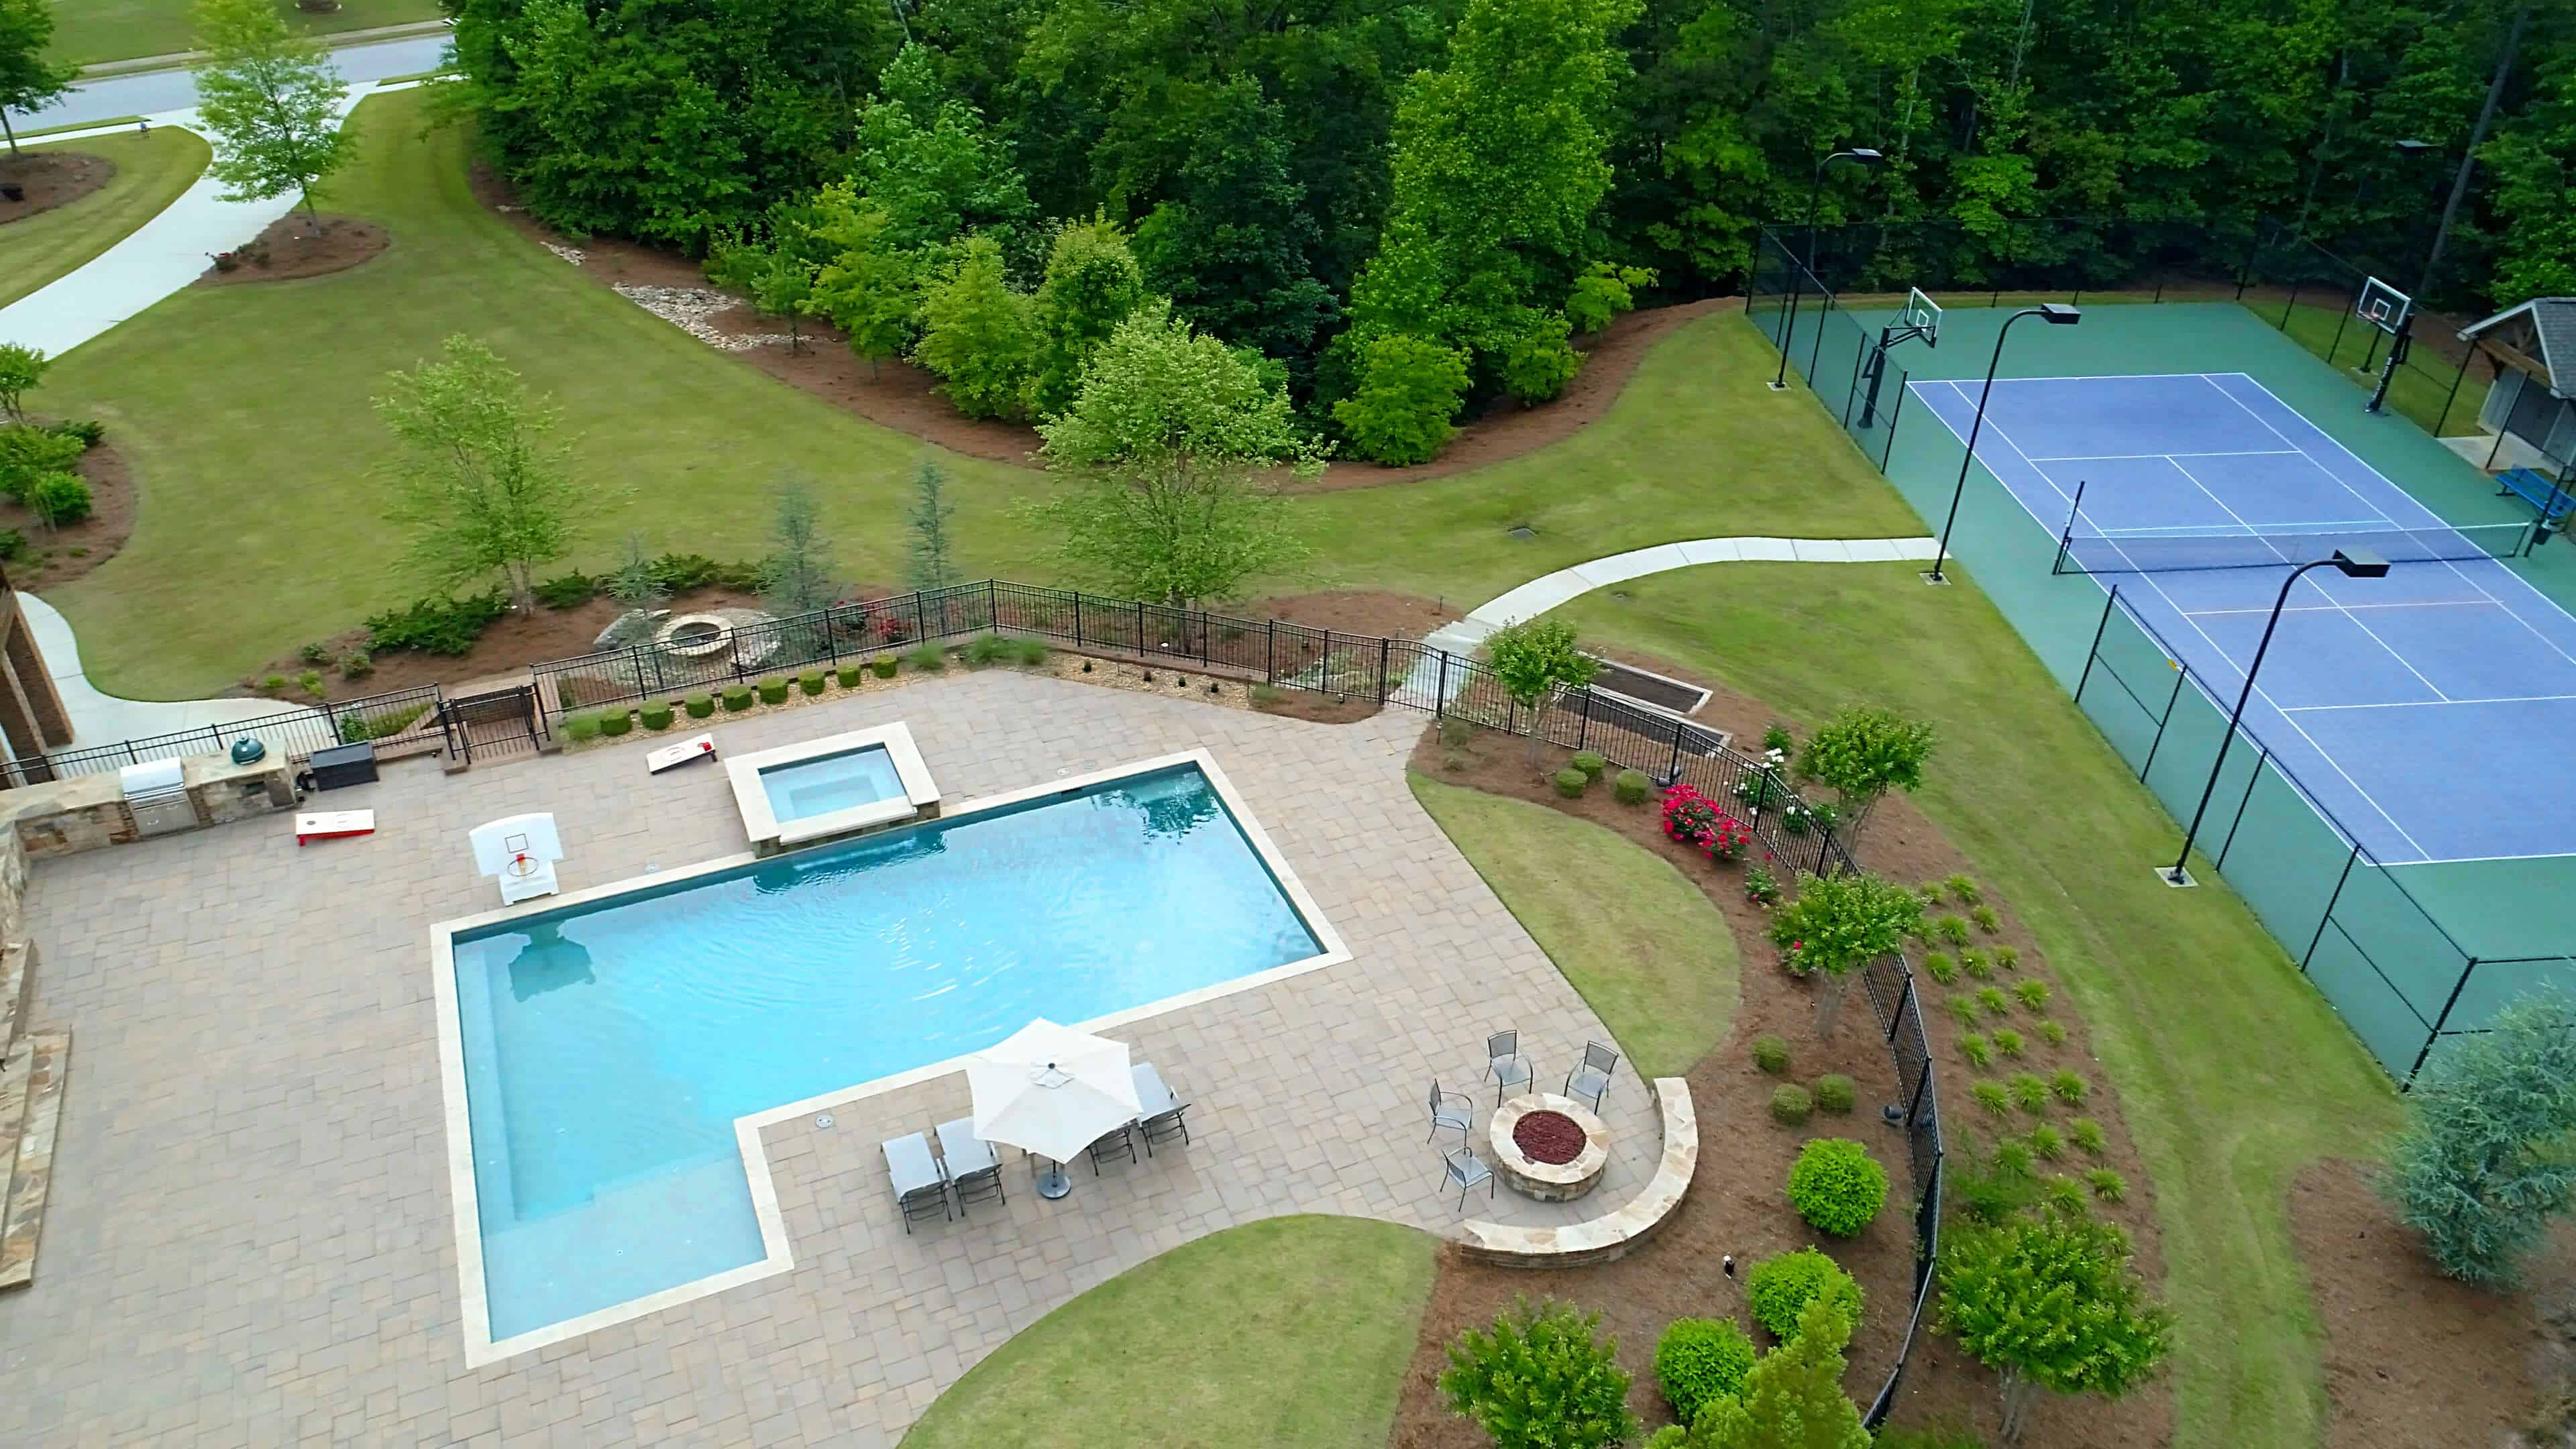 Swimming pool backyard with tennis court